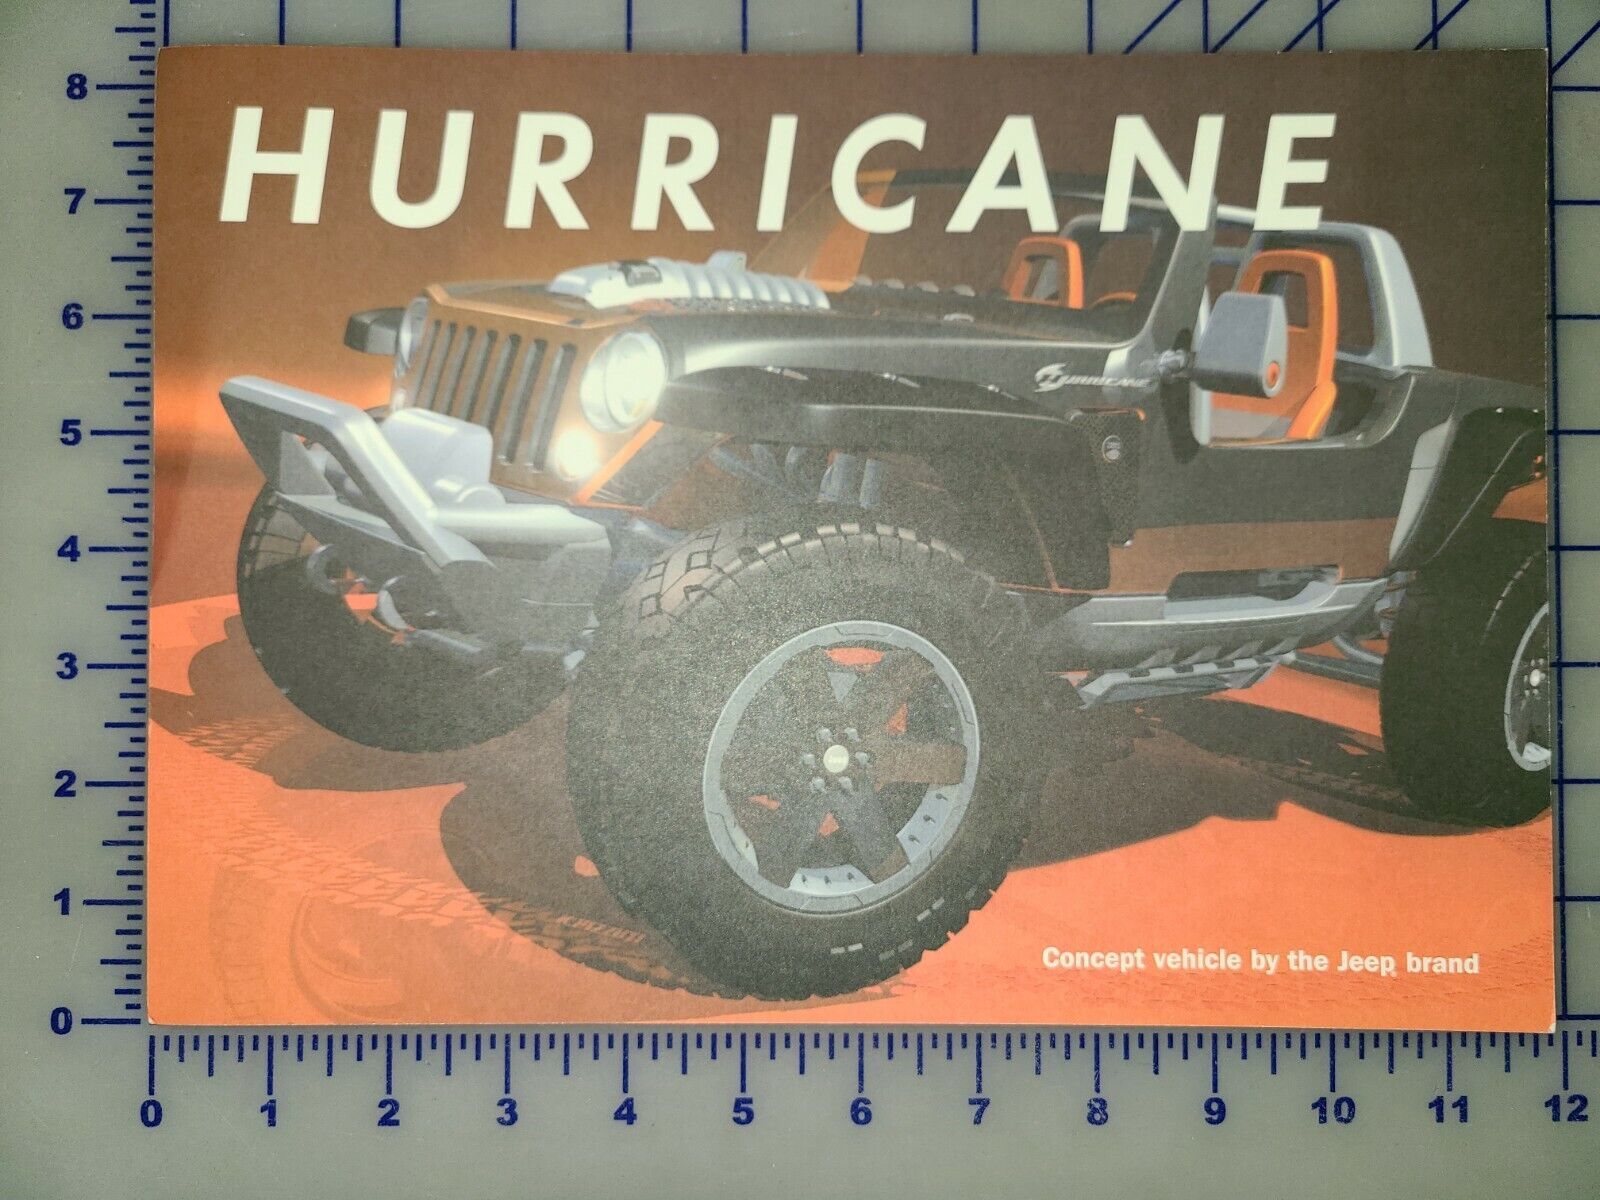 2005 Jeep Hurricane Concept Brochure Sheet